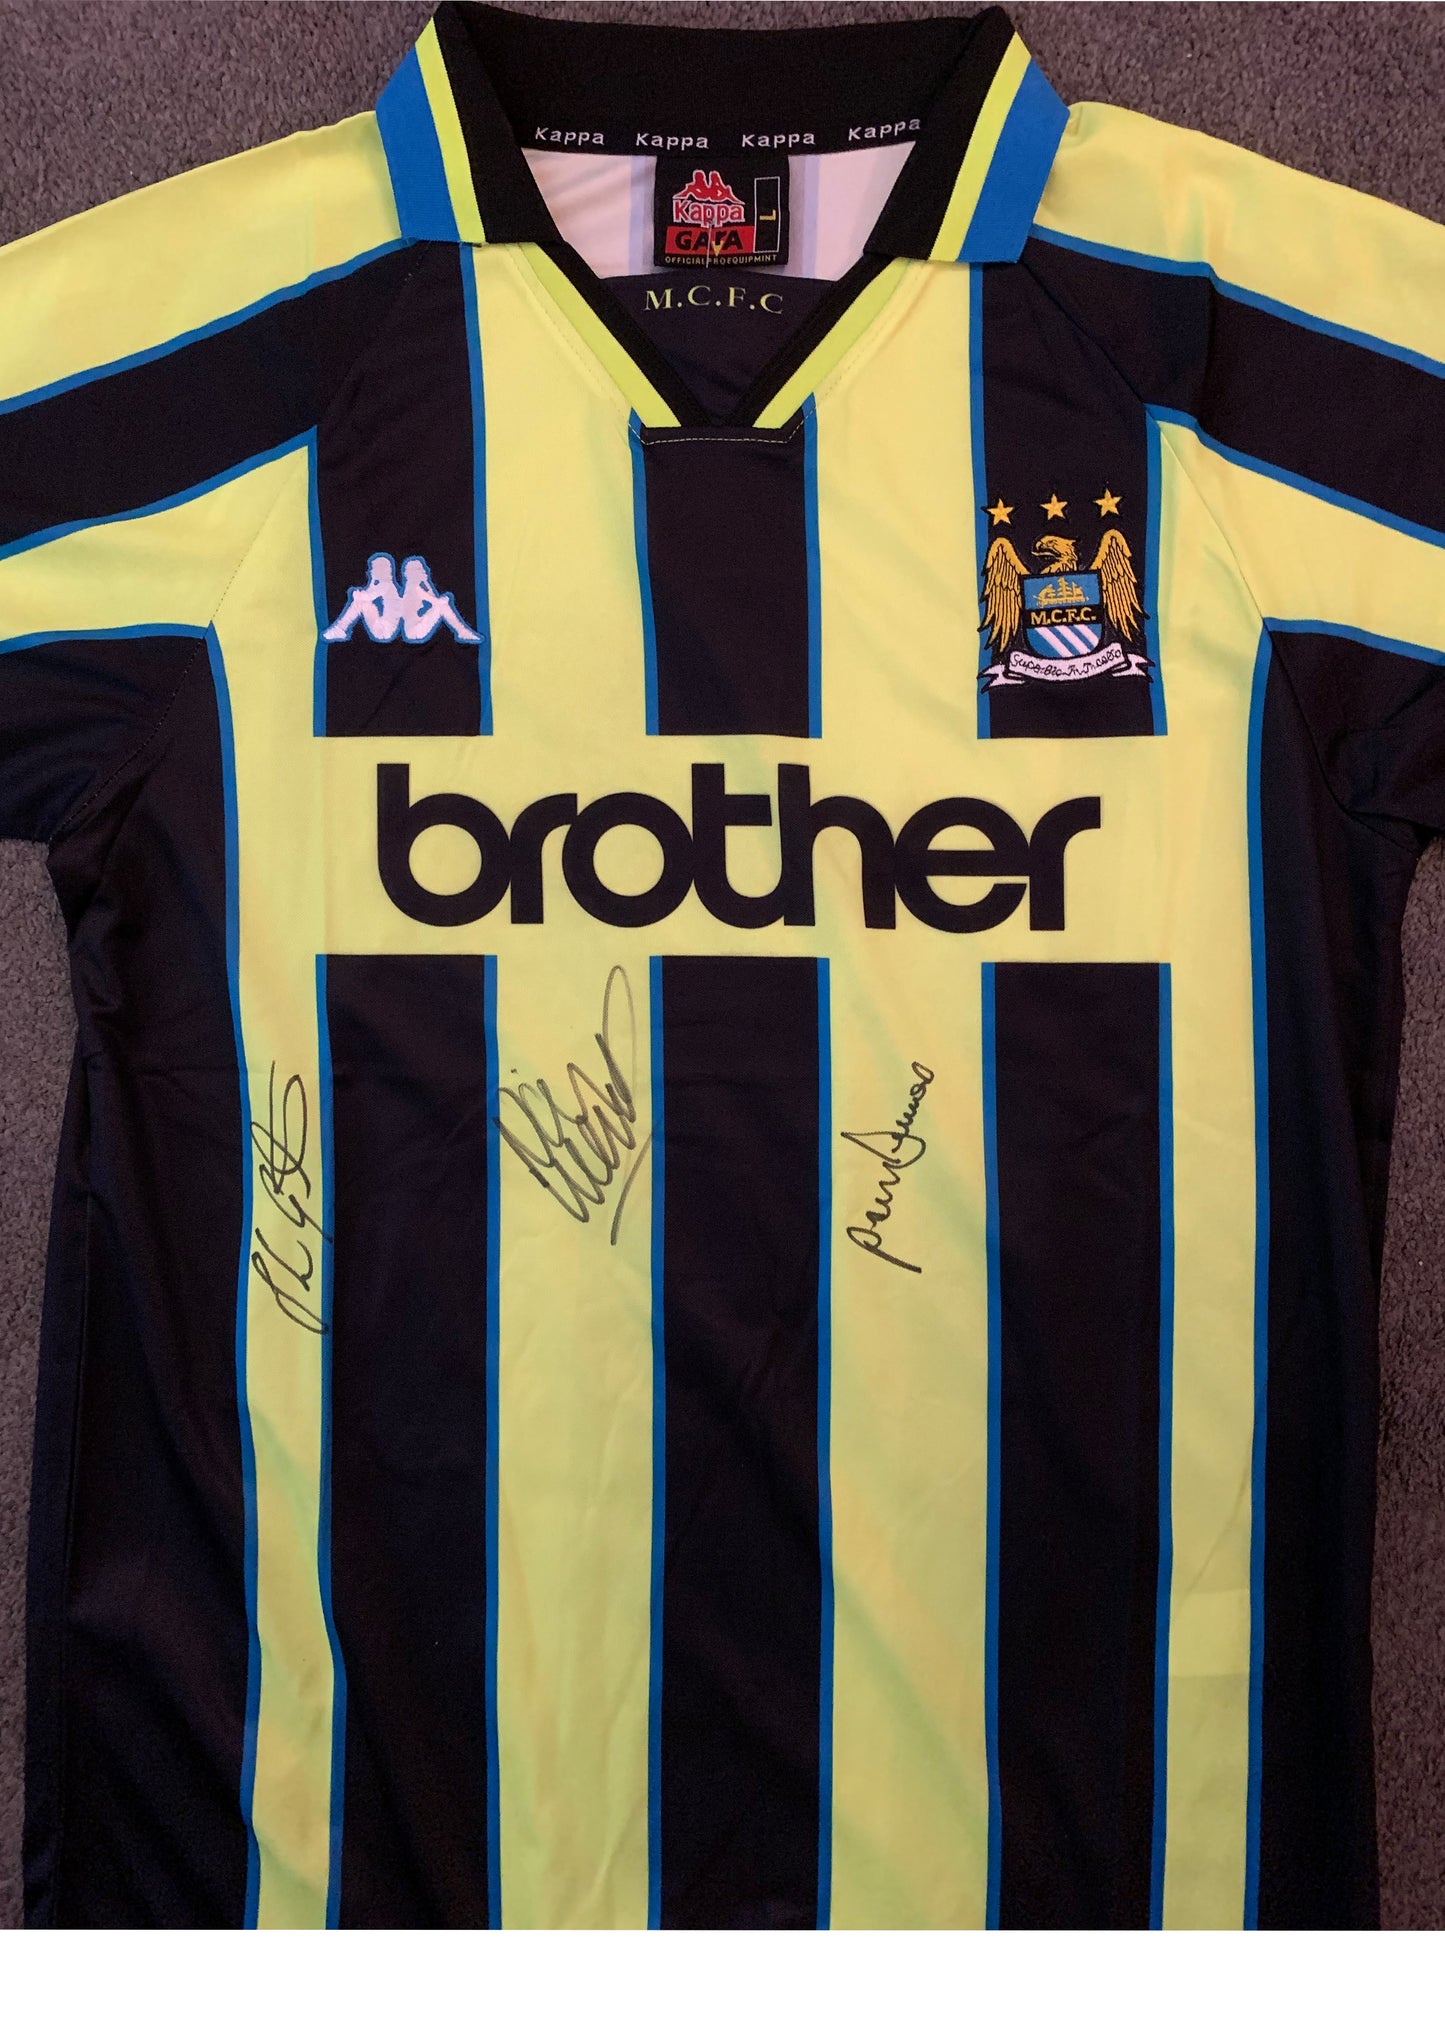 Shaun Goater, Nicky Weaver and Paul Dickov framed signed Manchester City shirt